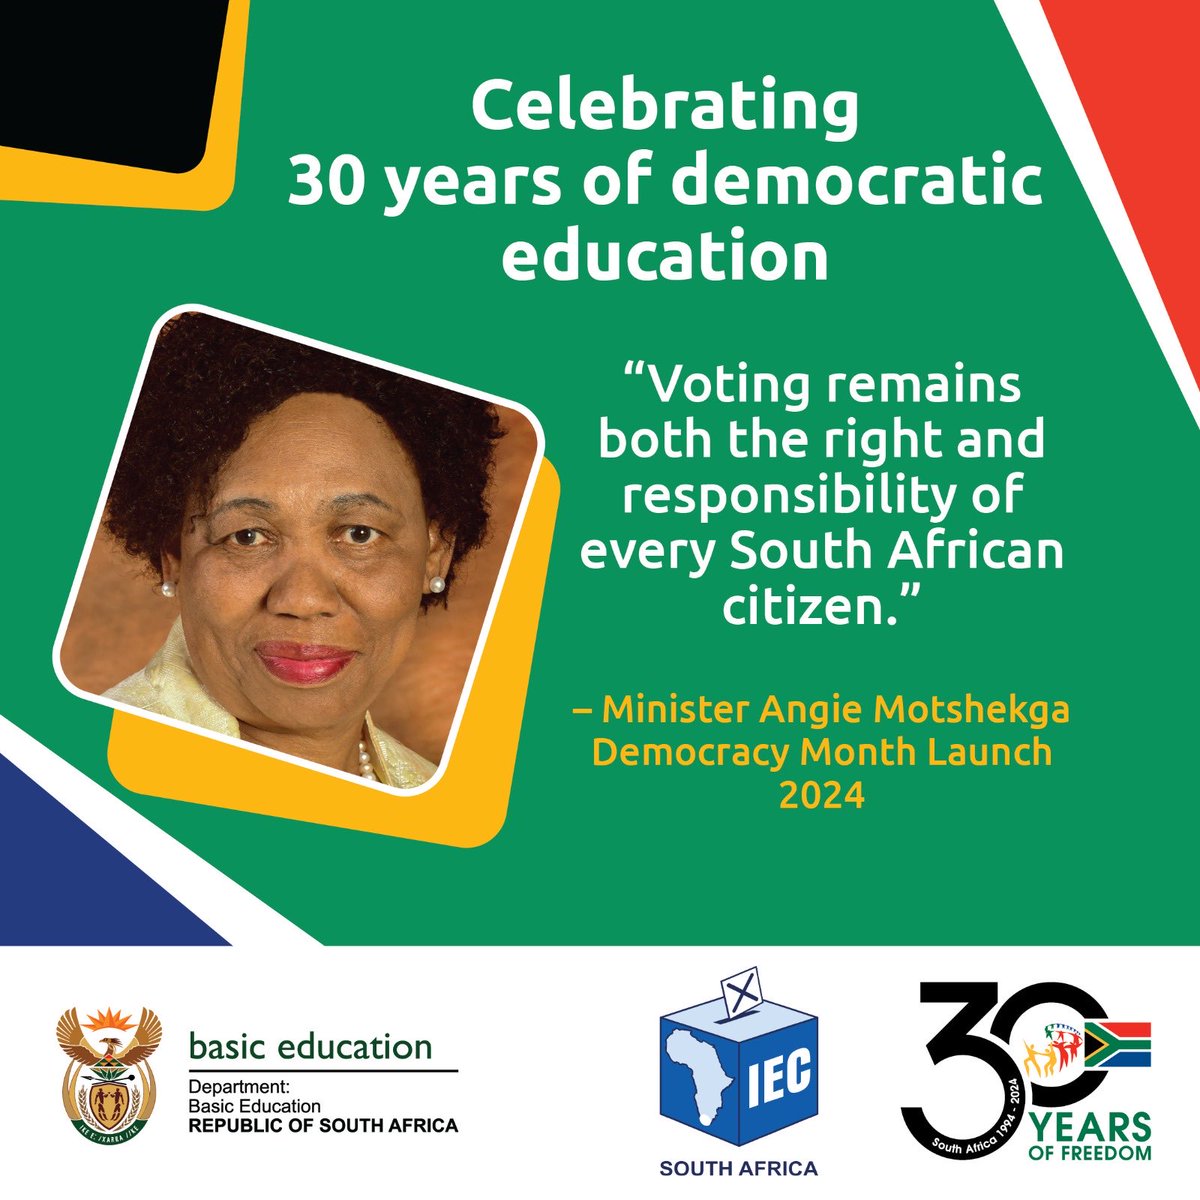 Remember to exercise your right to vote on 29 May 2024 #DemocracyEducation #CivicEducation ⁦@ElijahMhlanga⁩ ⁦@HubertMweli⁩ ⁦@ReginahMhaule⁩ ⁦@dbetvnews⁩